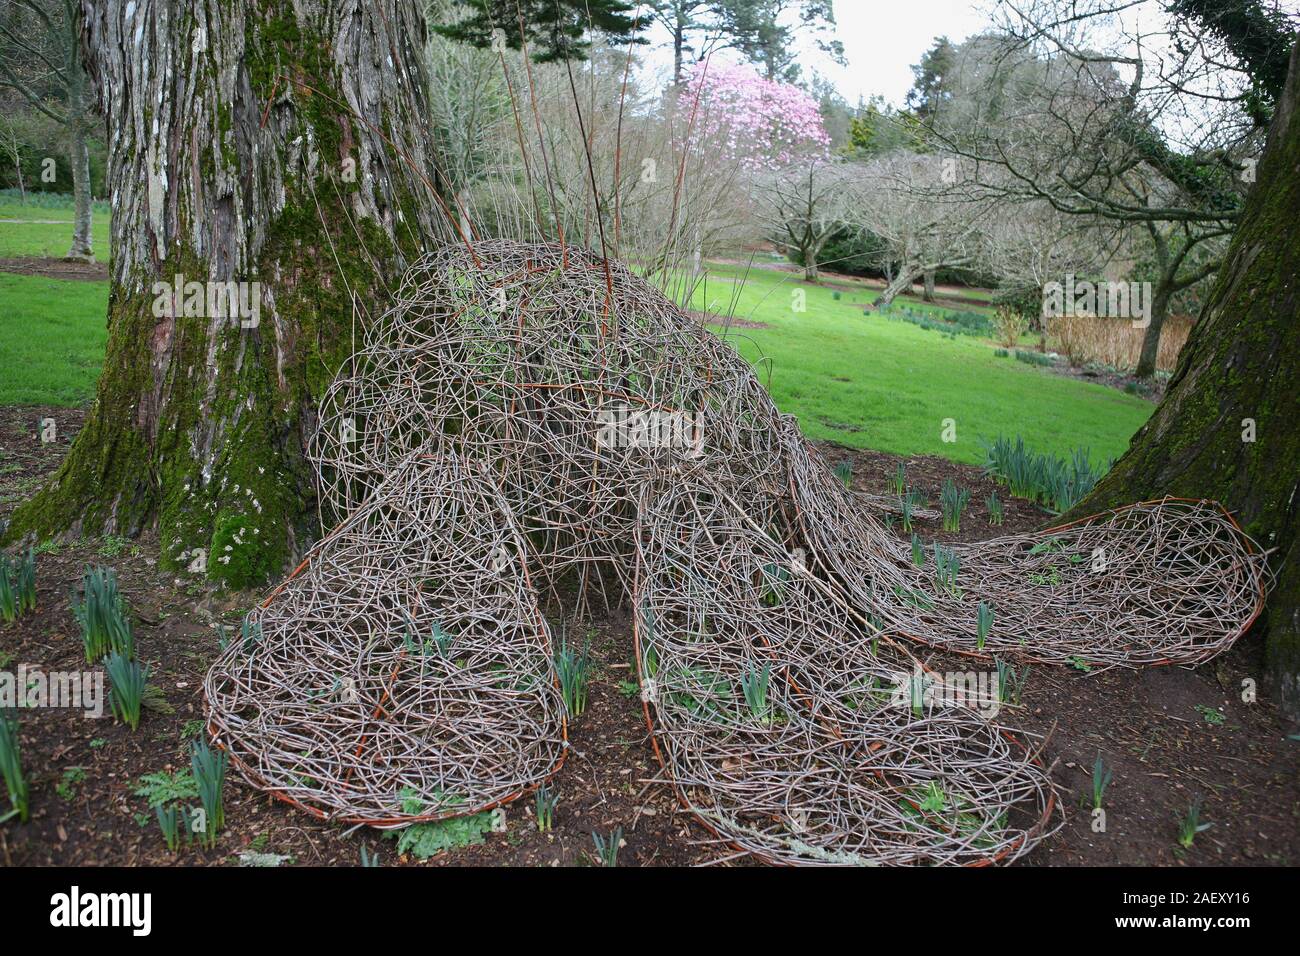 Abstract garden sculpture made of willow under trees in Trelissick Gardens, Feock, Cornwall Stock Photo